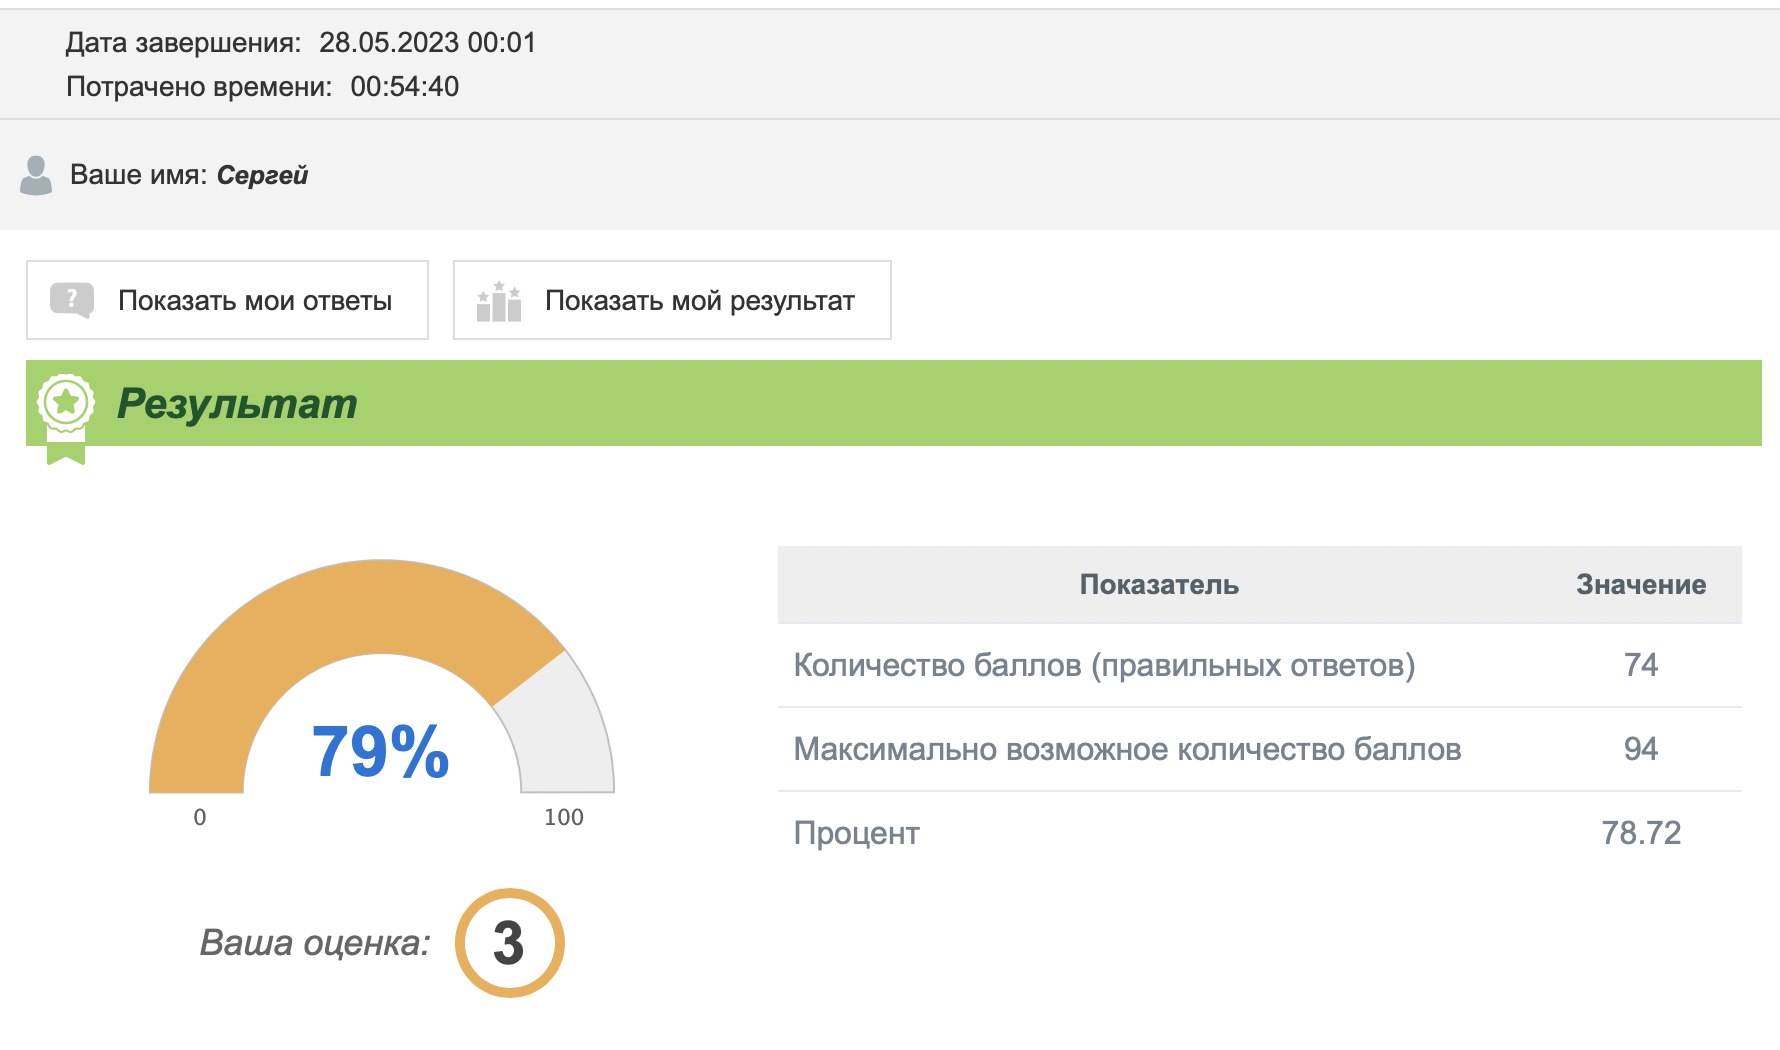 Https o rossii ru. Оценки на онлайтестпад. Результаты теста onlinetestpad.